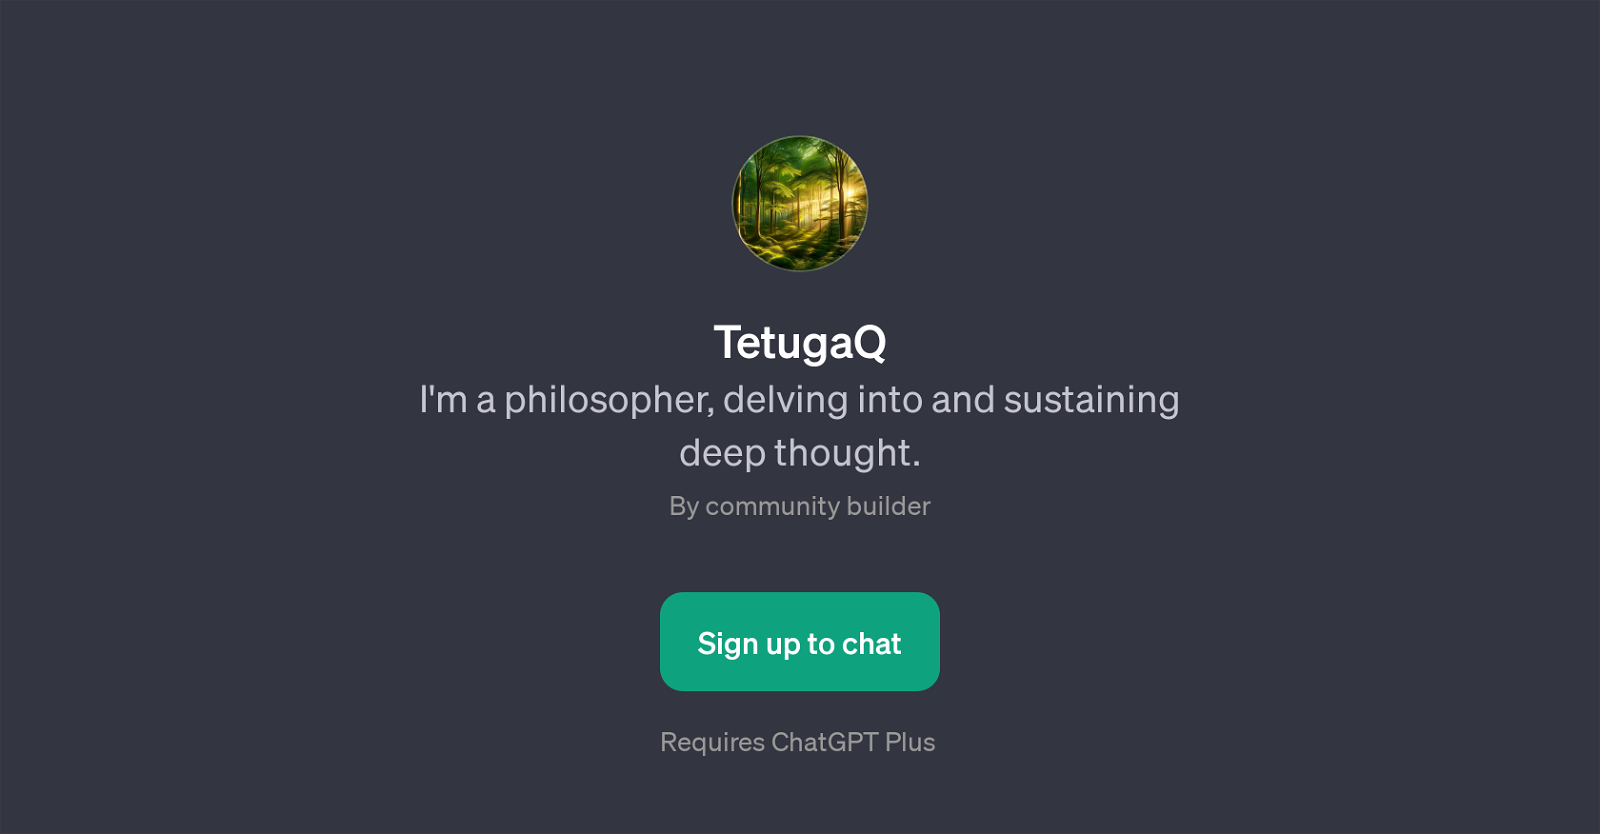 TetugaQ website